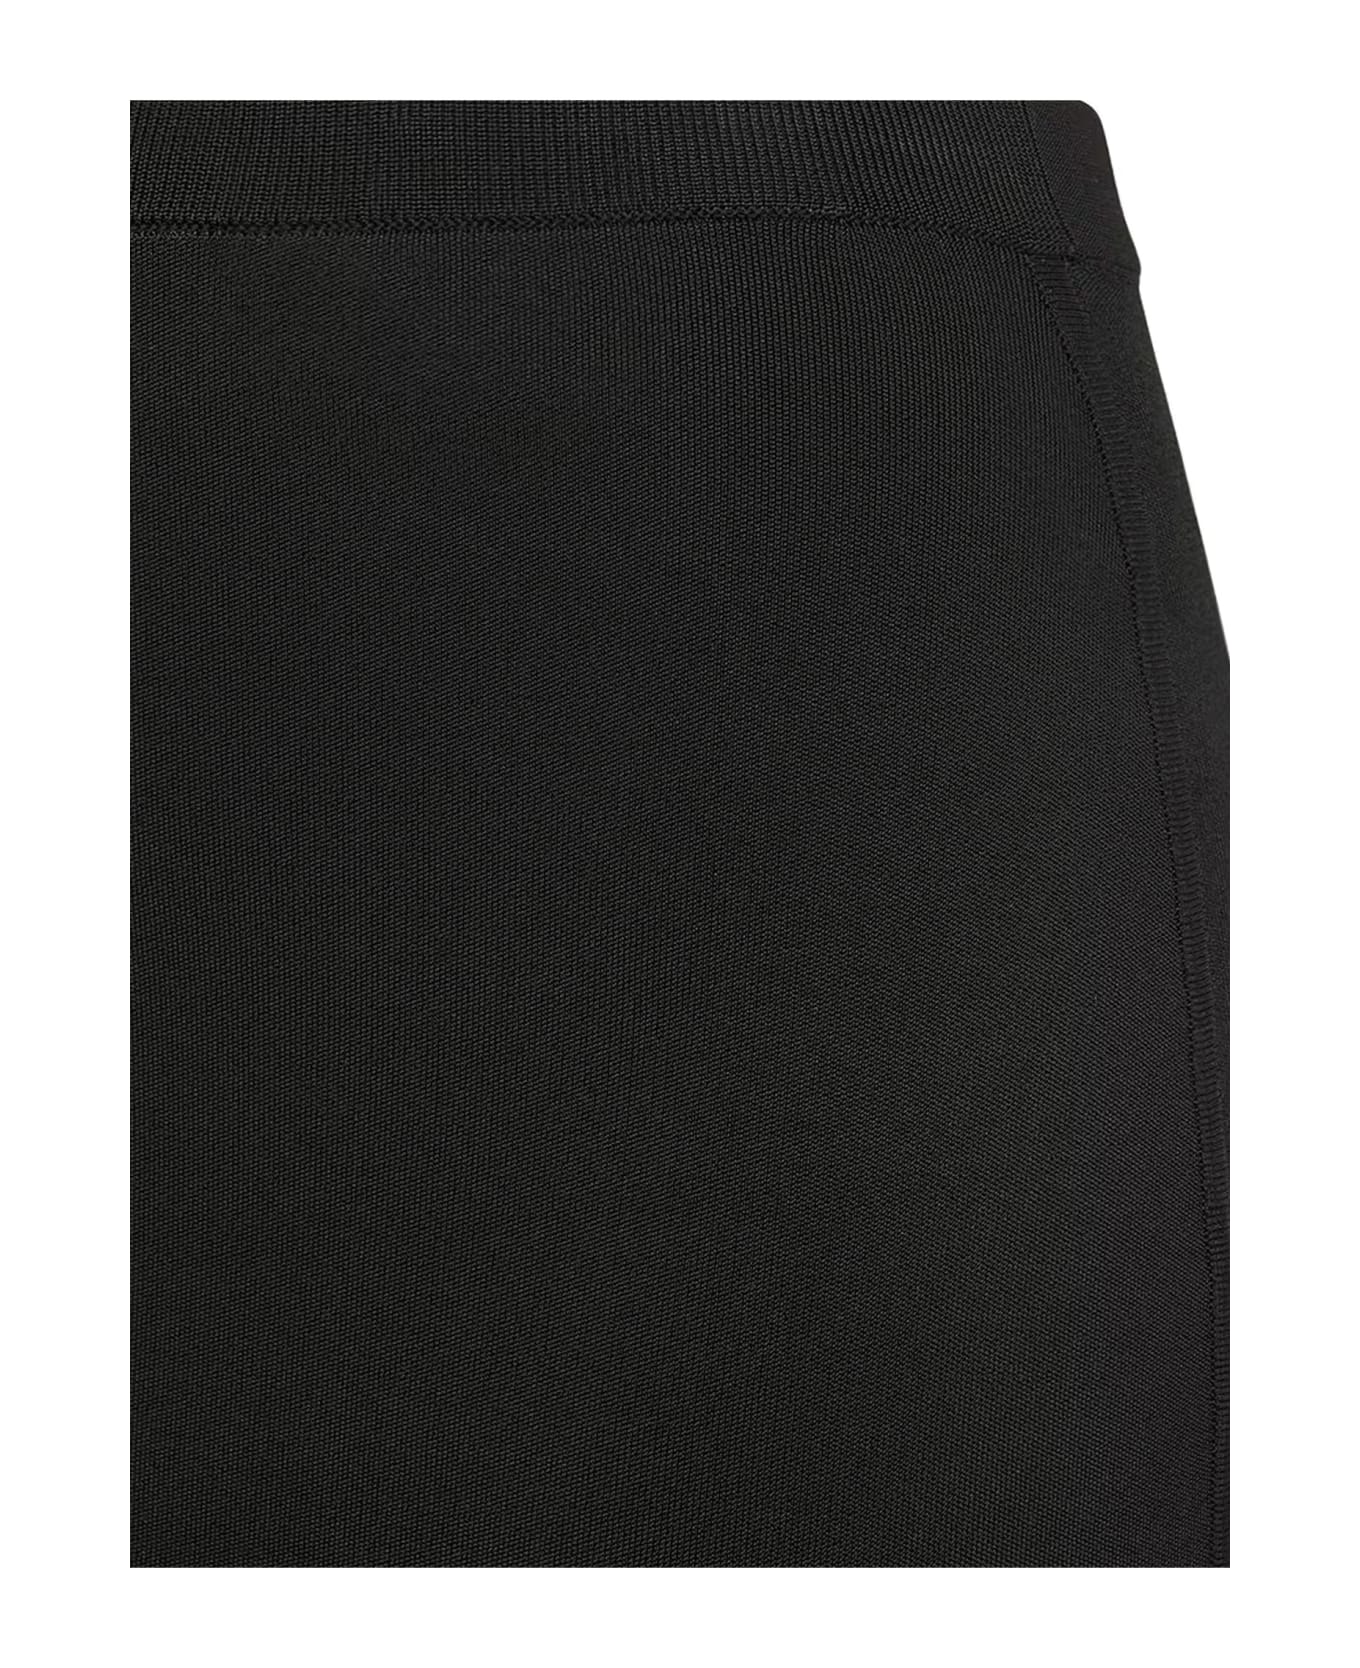 Saint Laurent Viscose Blend Skirt - Black